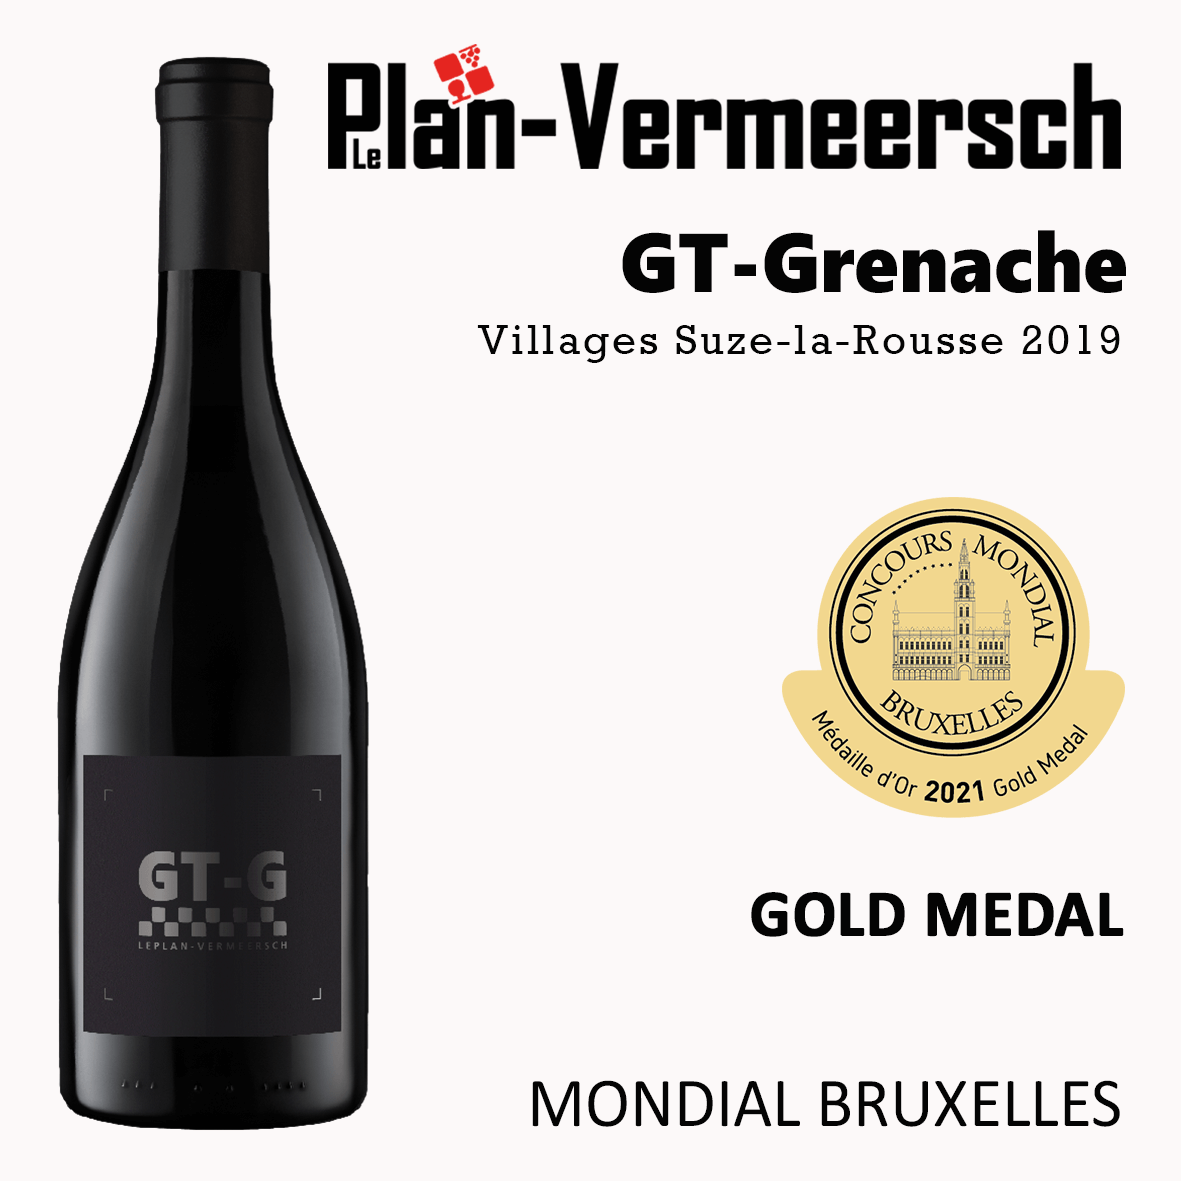 Bottle of wine Grenache GT-Grenache mondial Bruxelles gold medal LePlan-Vermeersch